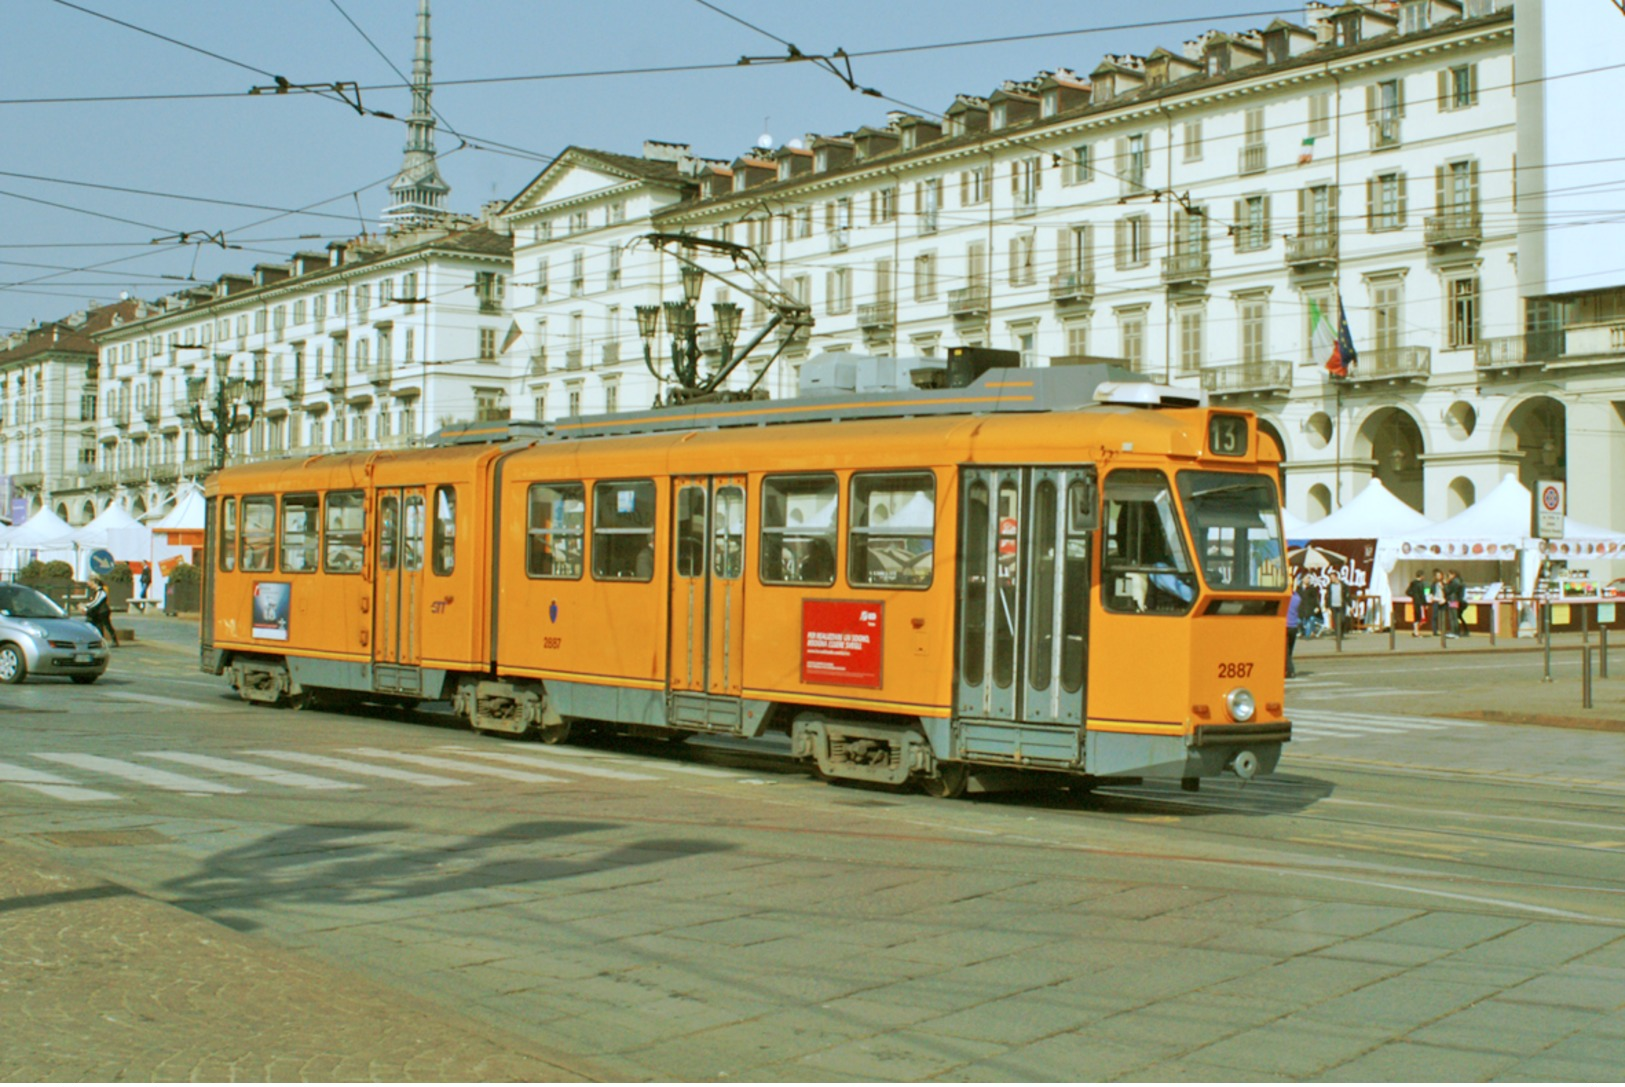 Turin (Italie)  Tramway De Turin - 03/2012 -  Piazza Vittorio Veneto Ligne N°15 - Rame N° 2887 (type 2800 – 2eme Série) - Transports